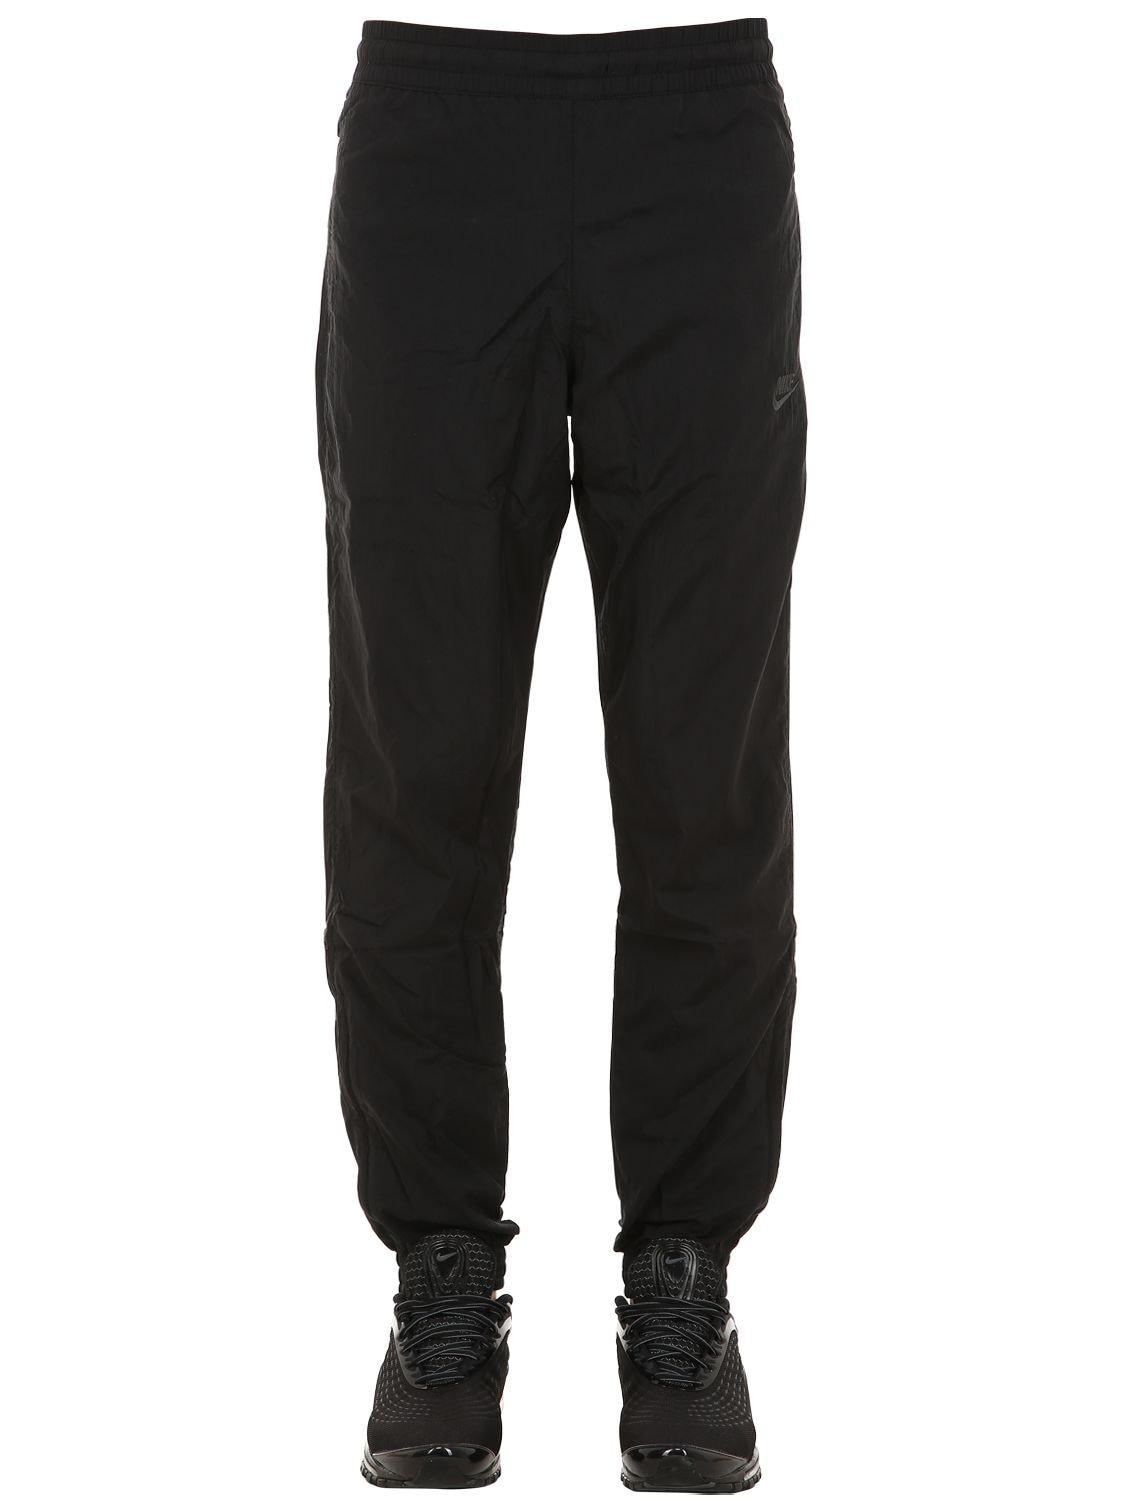 Nike Nsw Vw Swoosh Woven Track Pants in Black for Men - Lyst